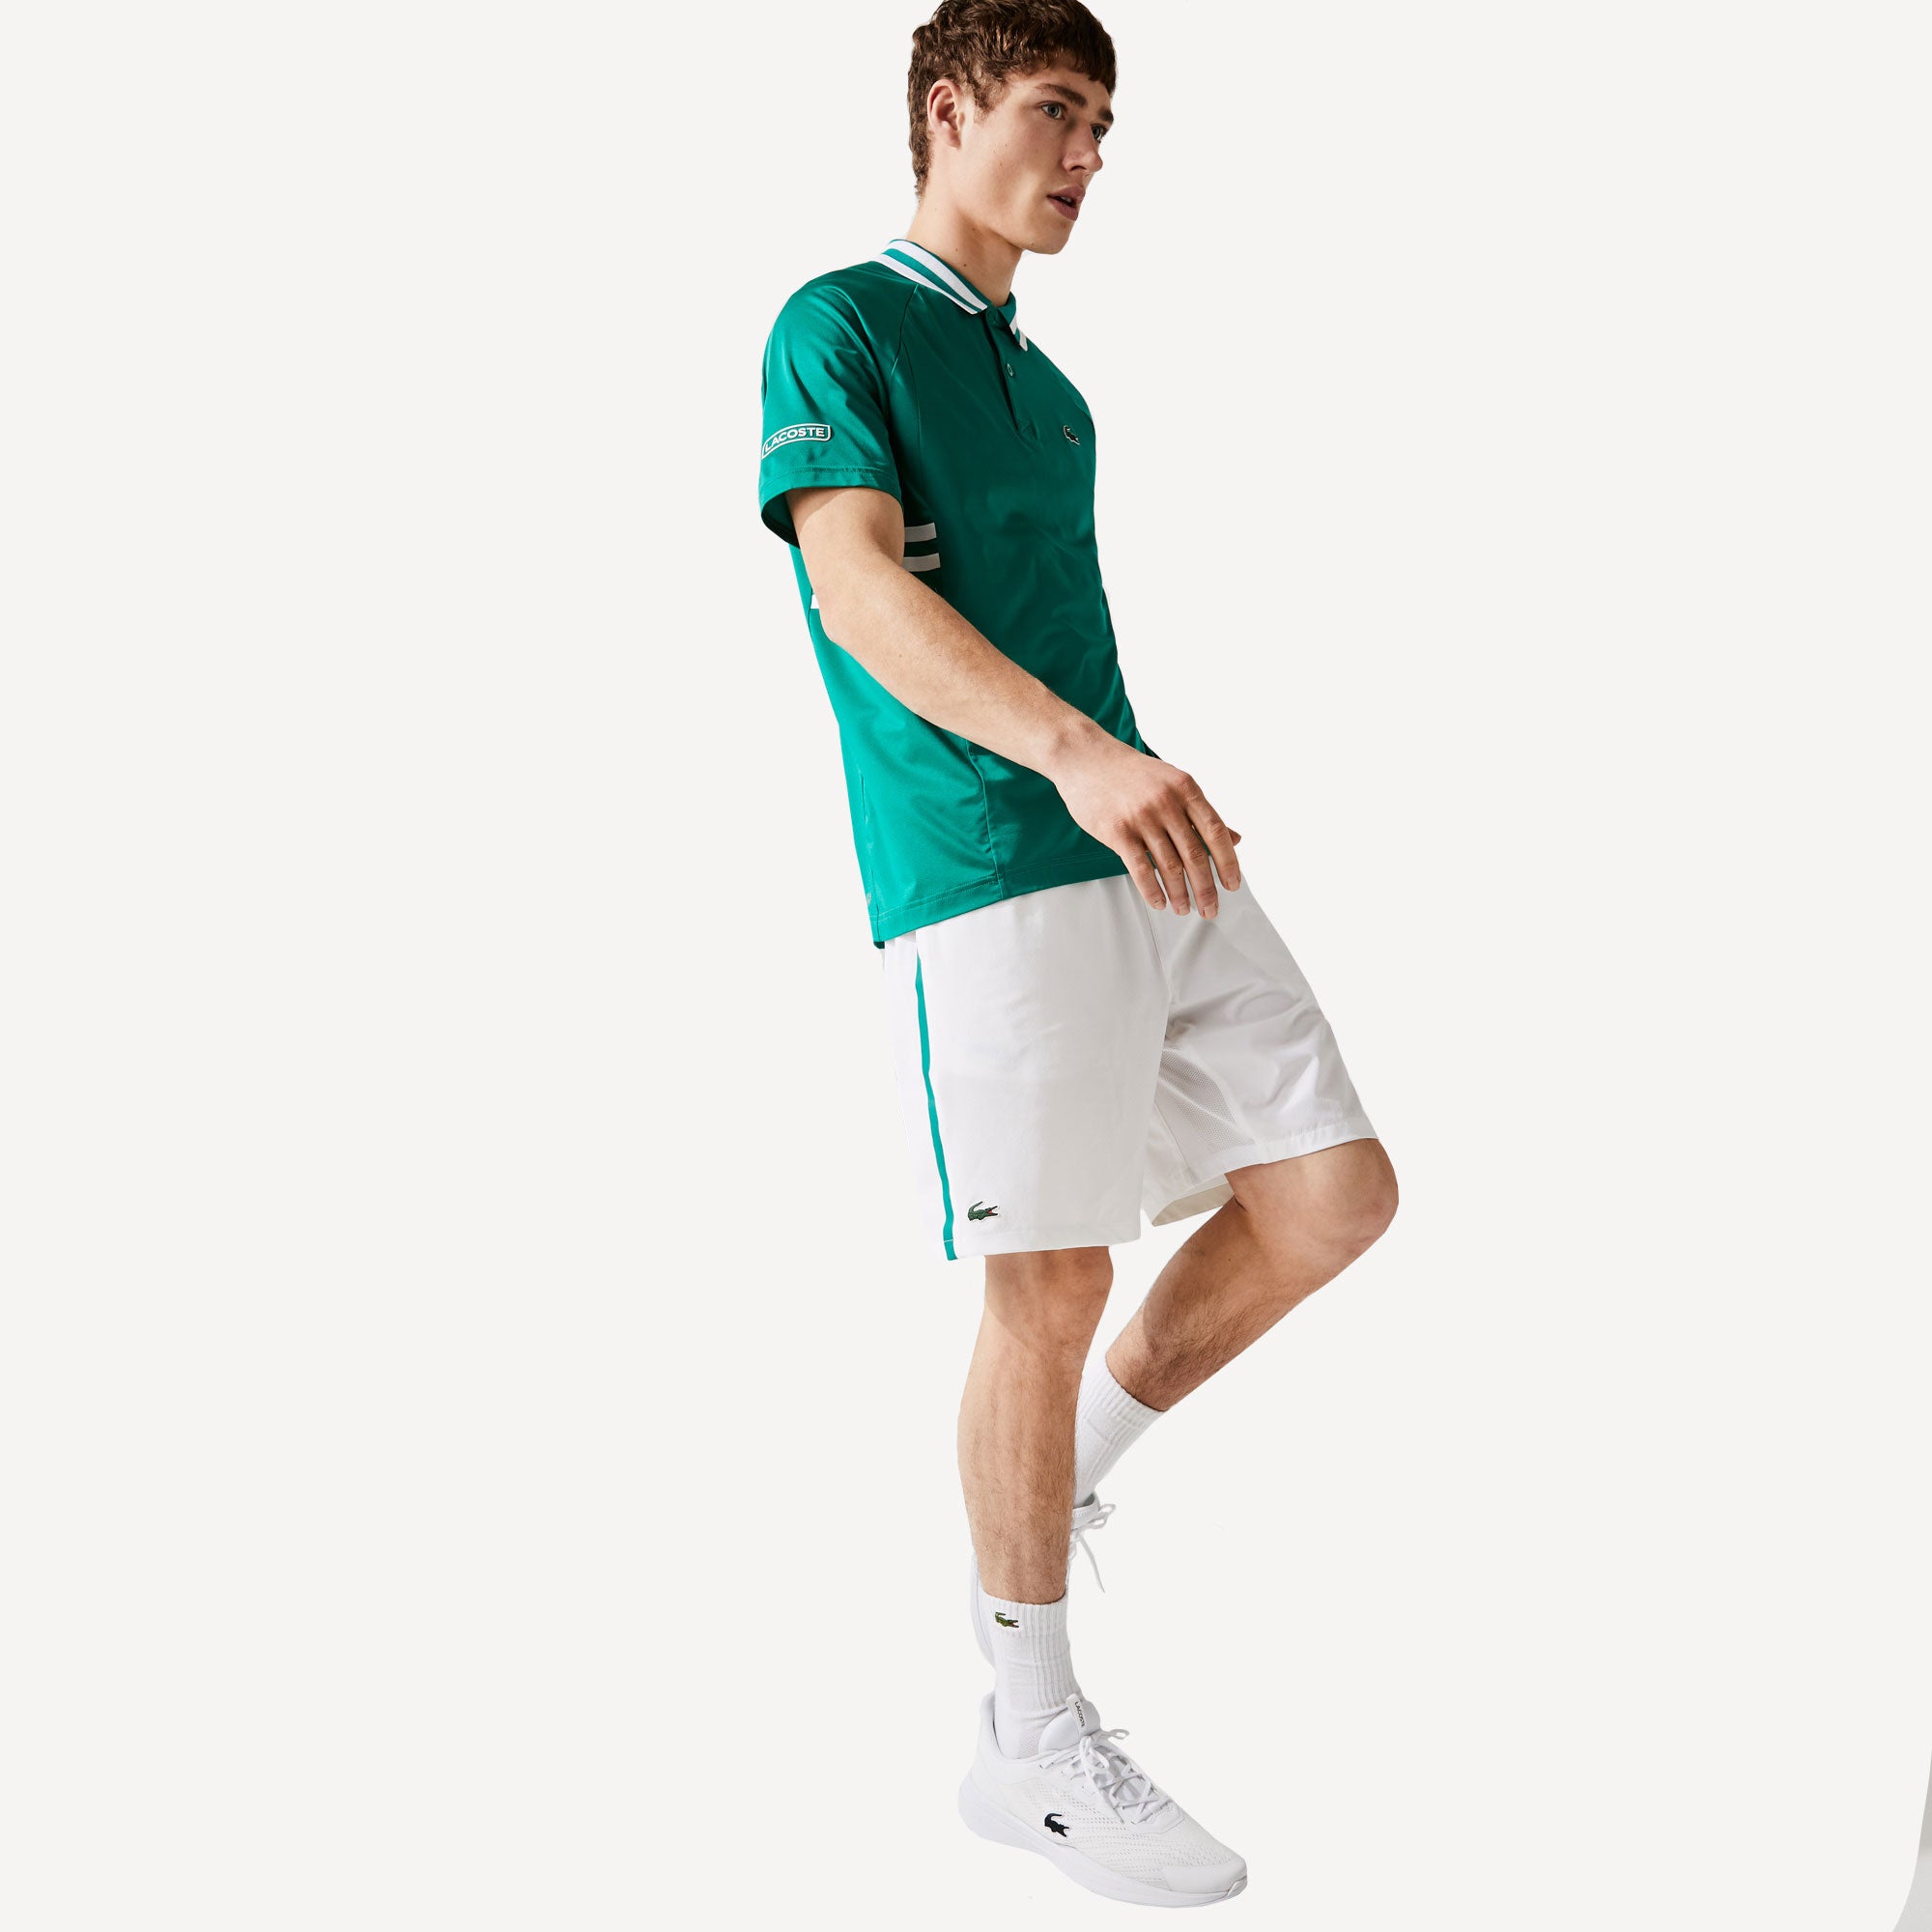 Lacoste Djokovic Men's Tennis Shorts White (1)